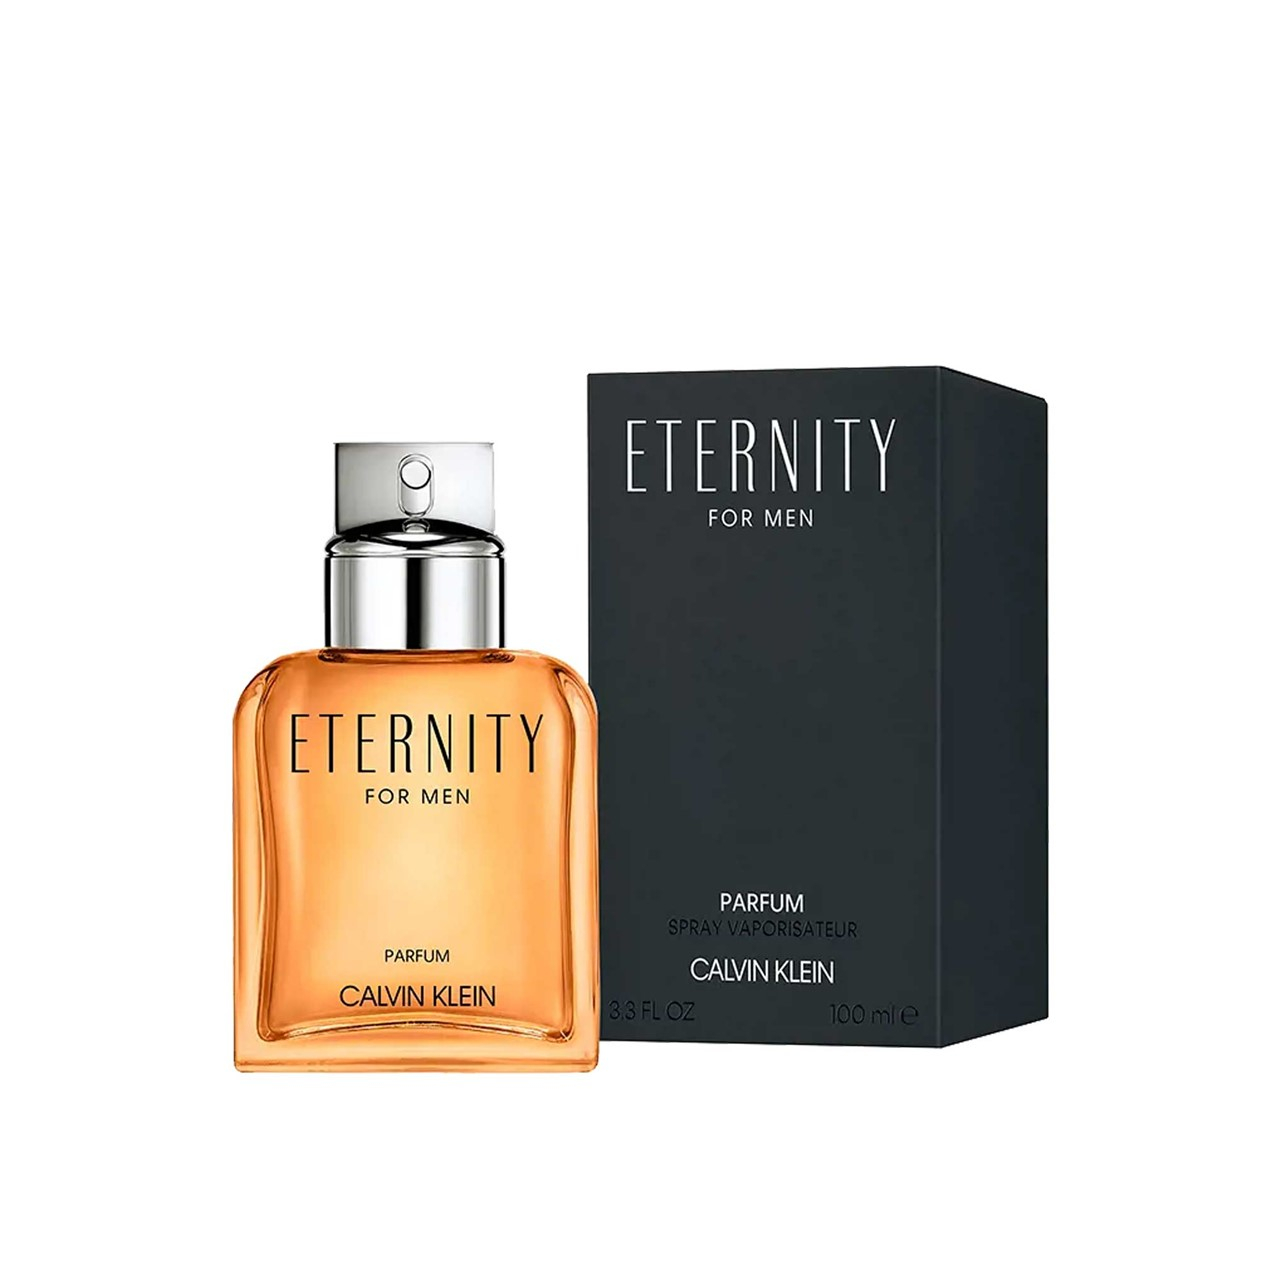 Calvin Klein Beauty Eau De Parfum 100ml Spray Best Price in Sri Lanka